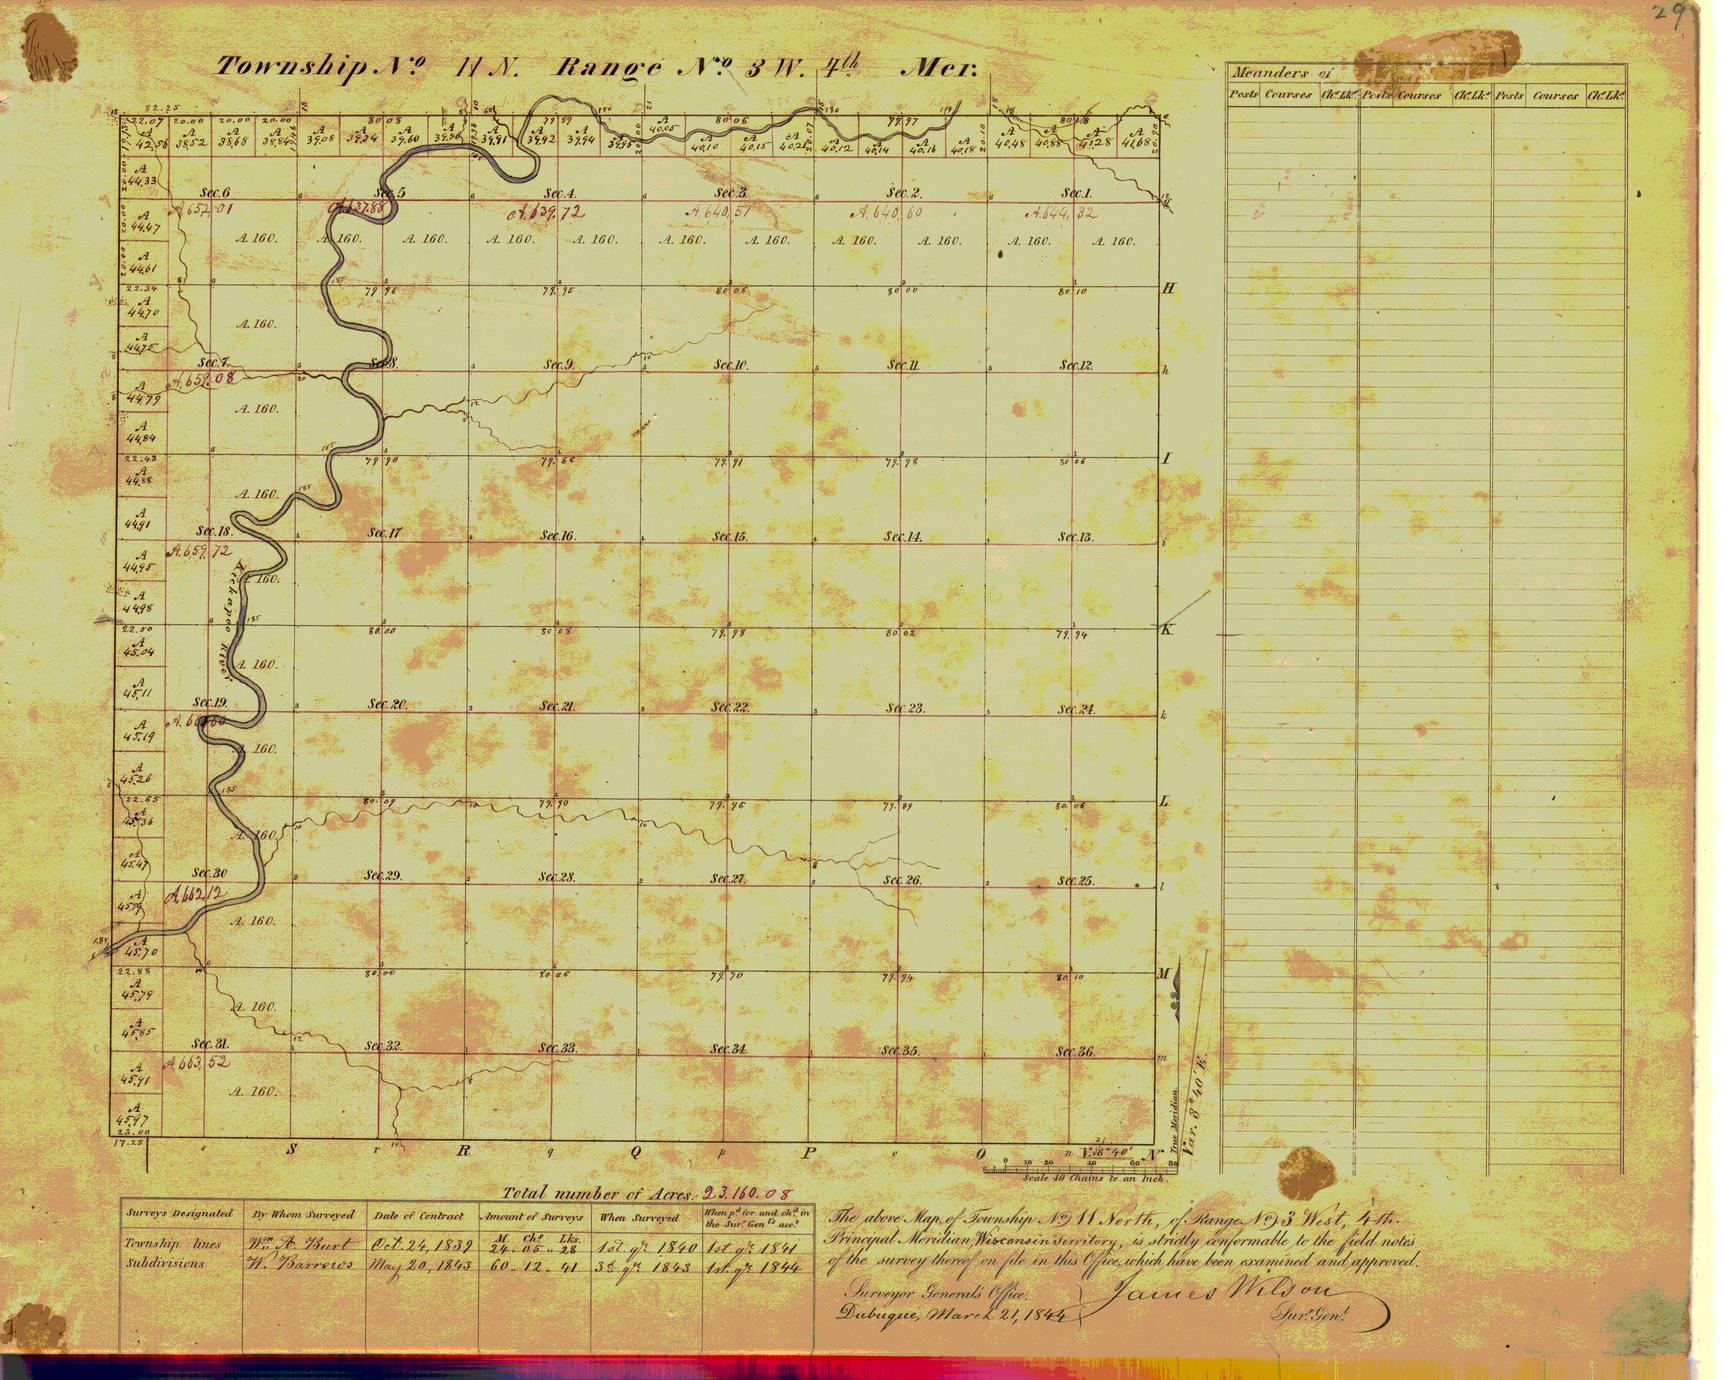 [Public Land Survey System map: Wisconsin Township 11 North, Range 03 West]